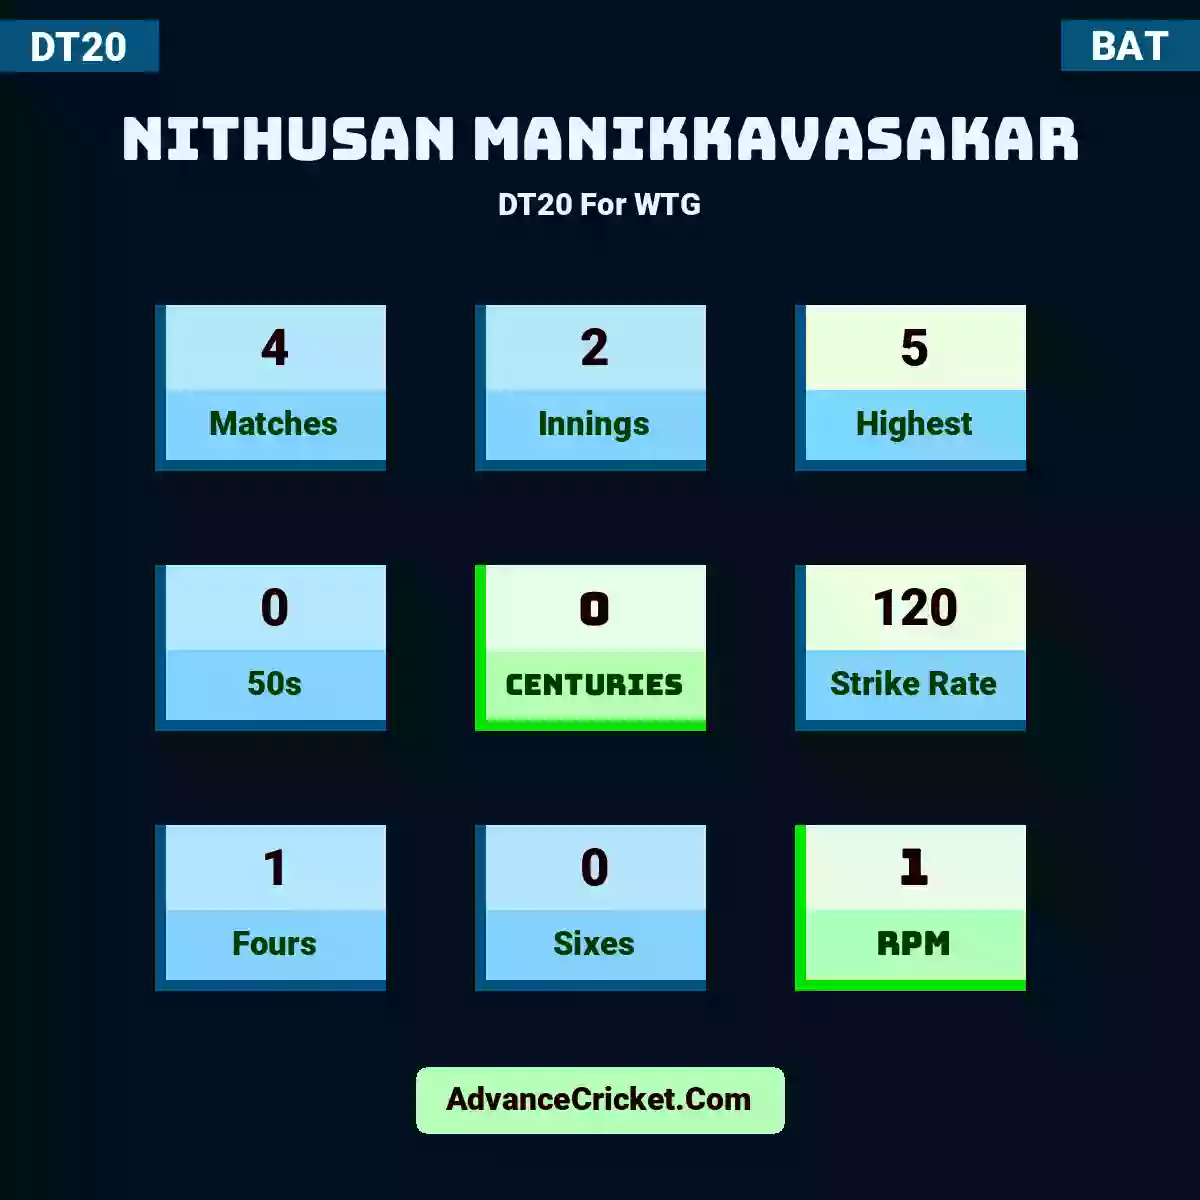 Nithusan manikkavasakar DT20  For WTG, Nithusan manikkavasakar played 4 matches, scored 5 runs as highest, 0 half-centuries, and 0 centuries, with a strike rate of 120. N.manikkavasakar hit 1 fours and 0 sixes, with an RPM of 1.